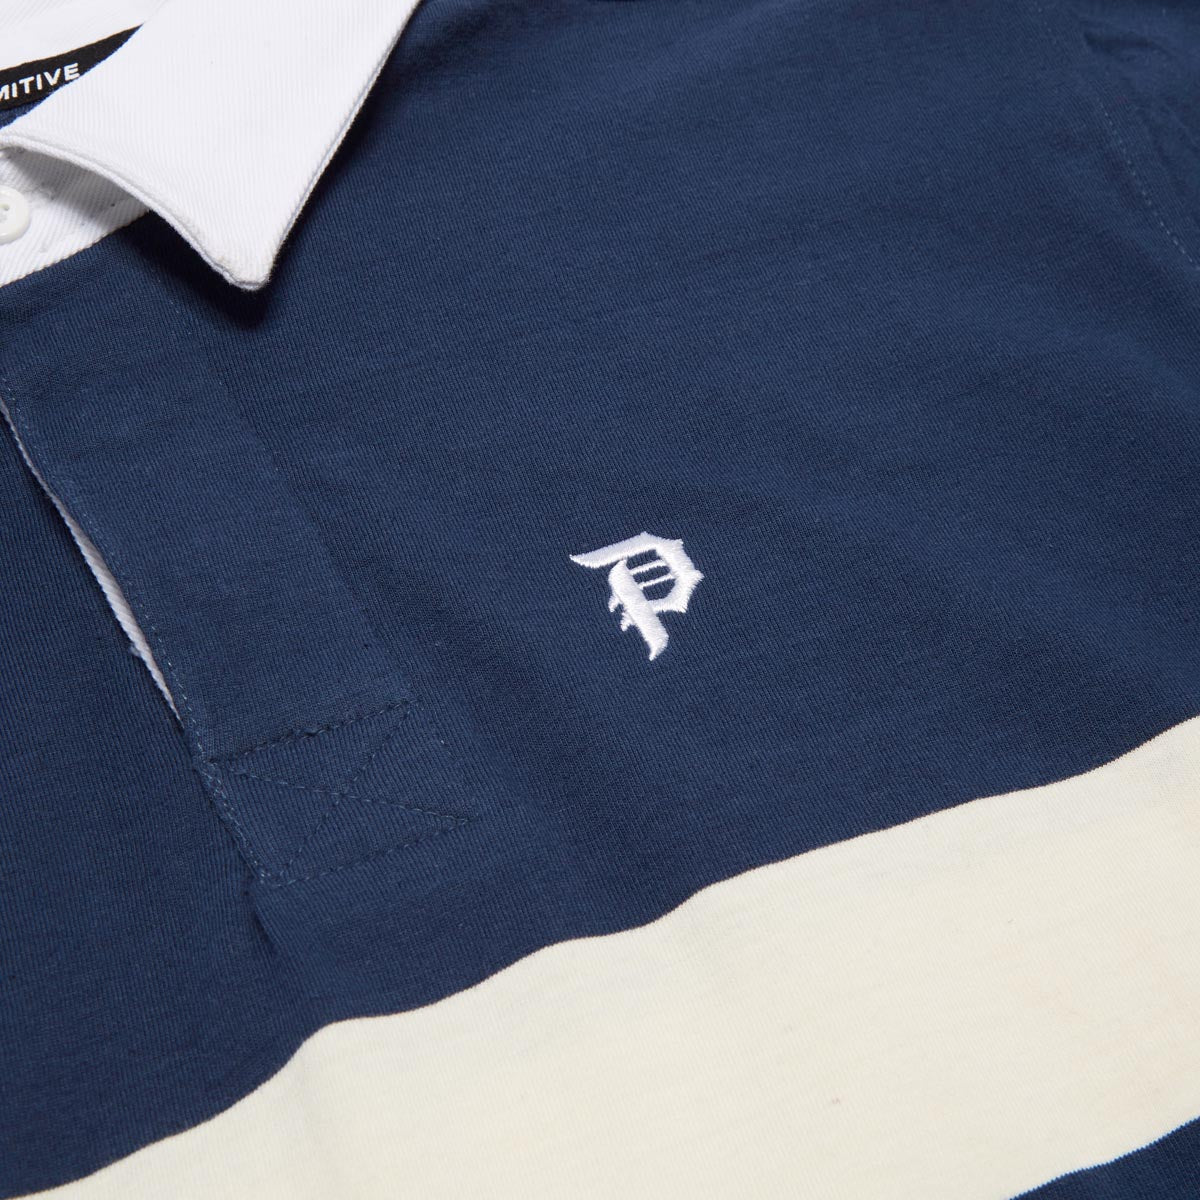 Primitive Dirty P Polo Long Sleeve Shirt - Navy image 2